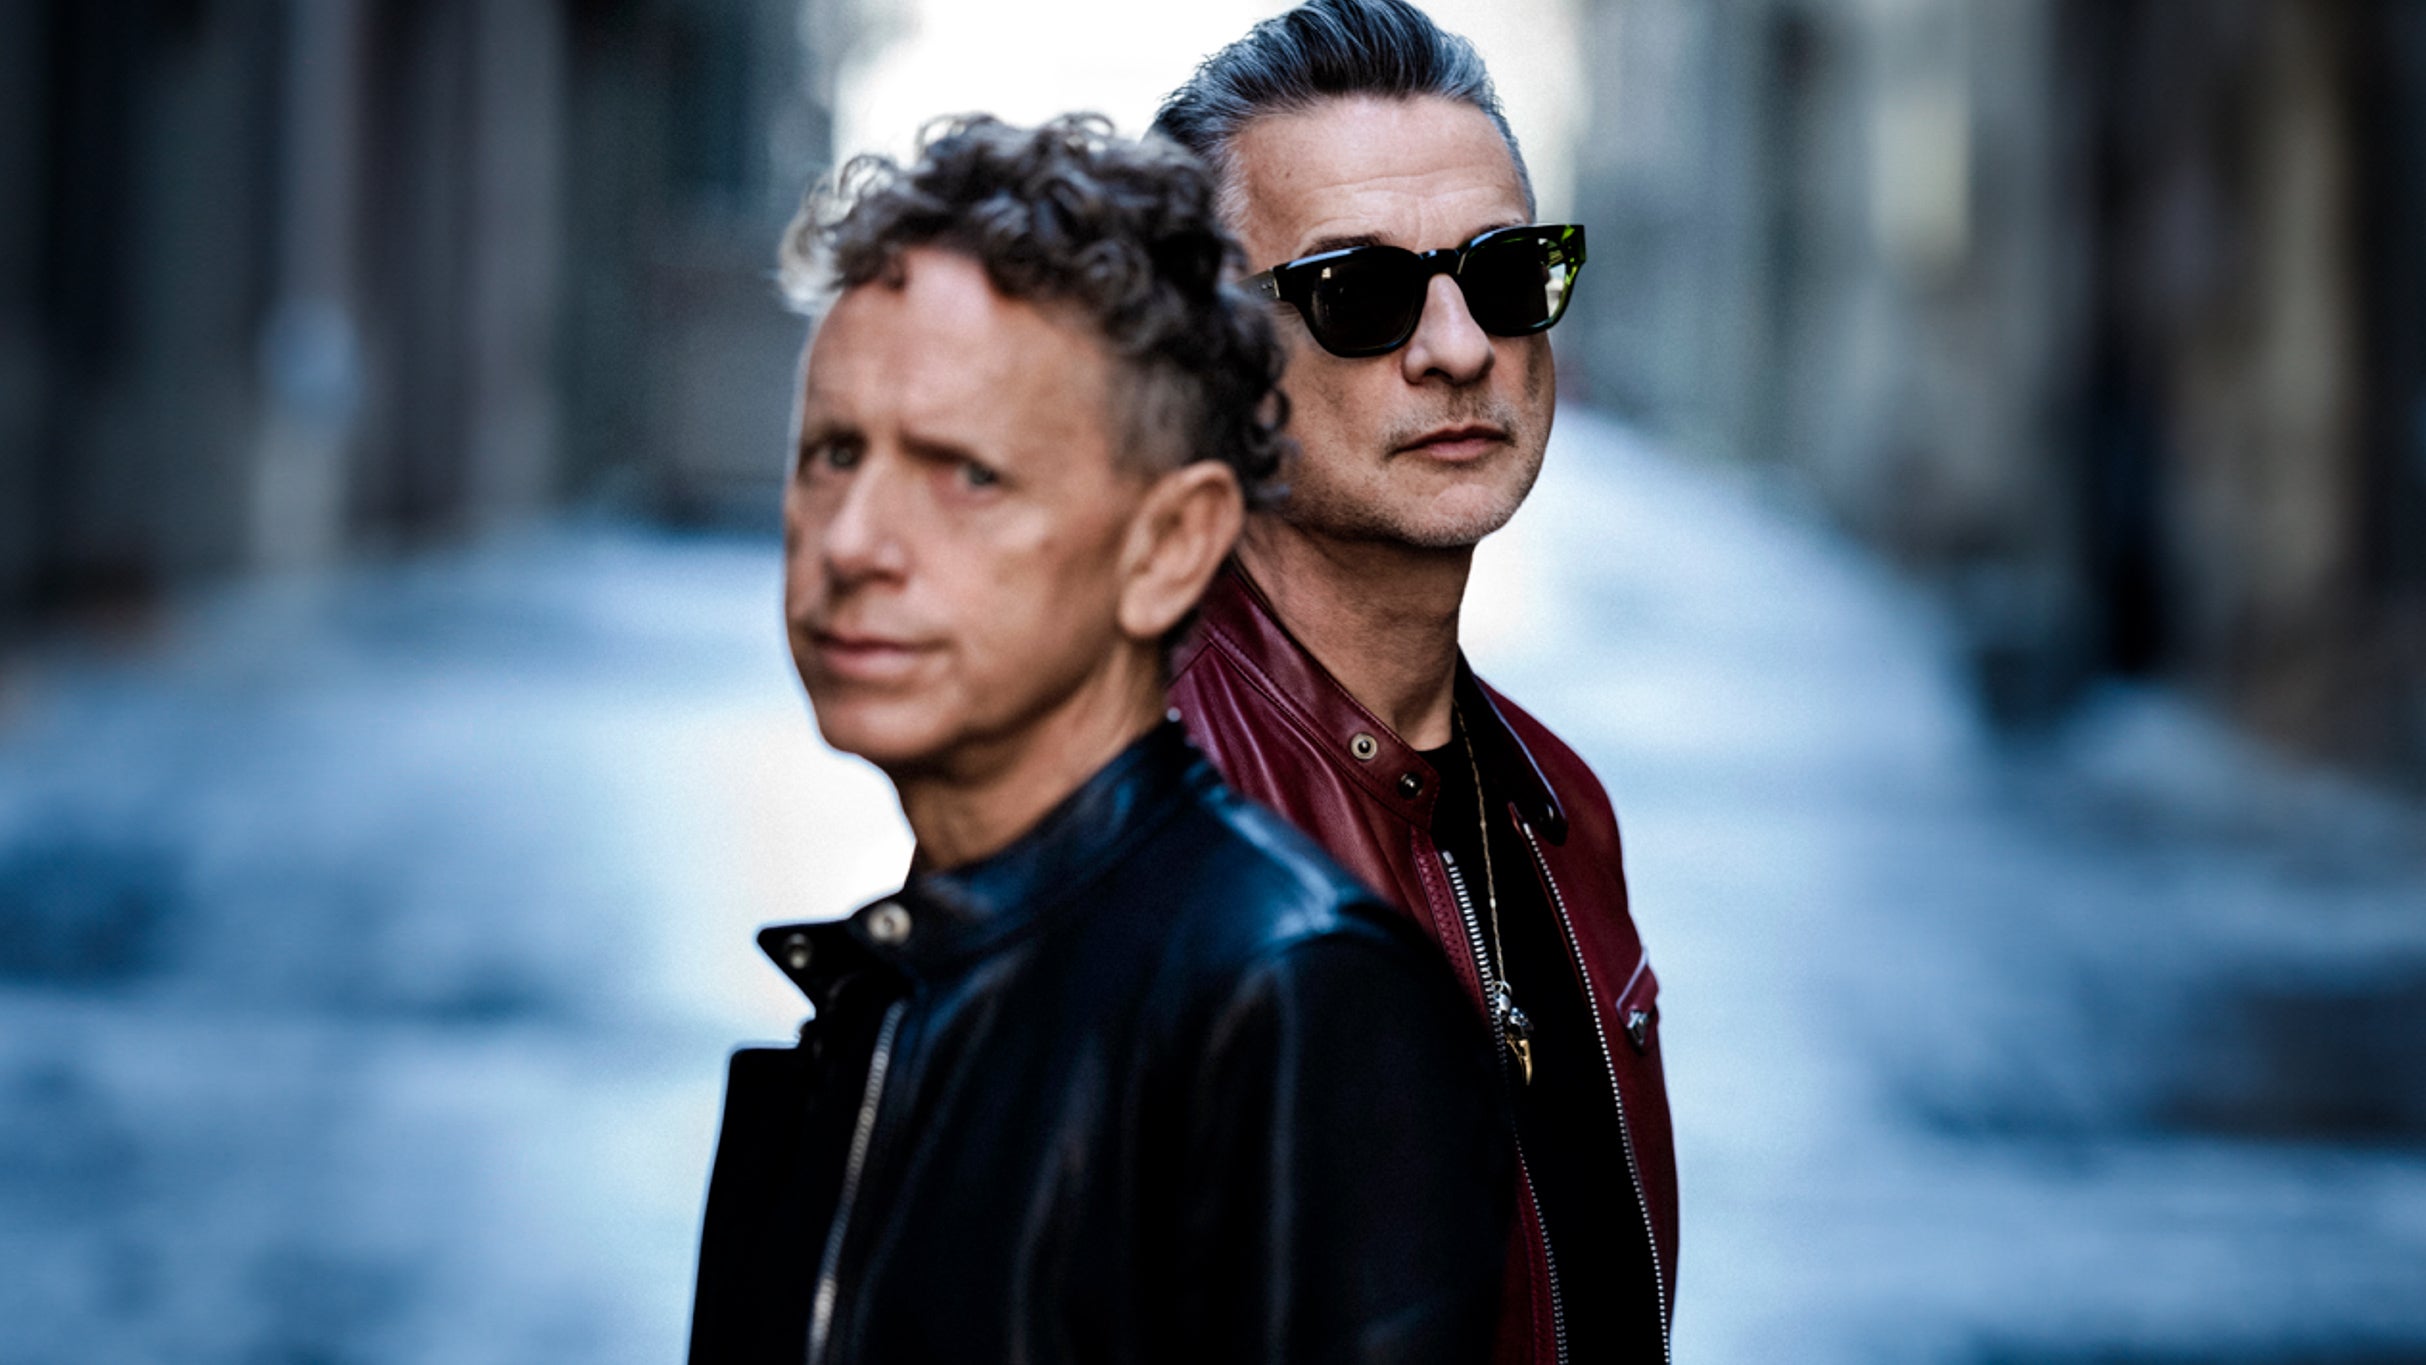 Depeche Mode in Birmingham promo photo for Live Nation presale offer code